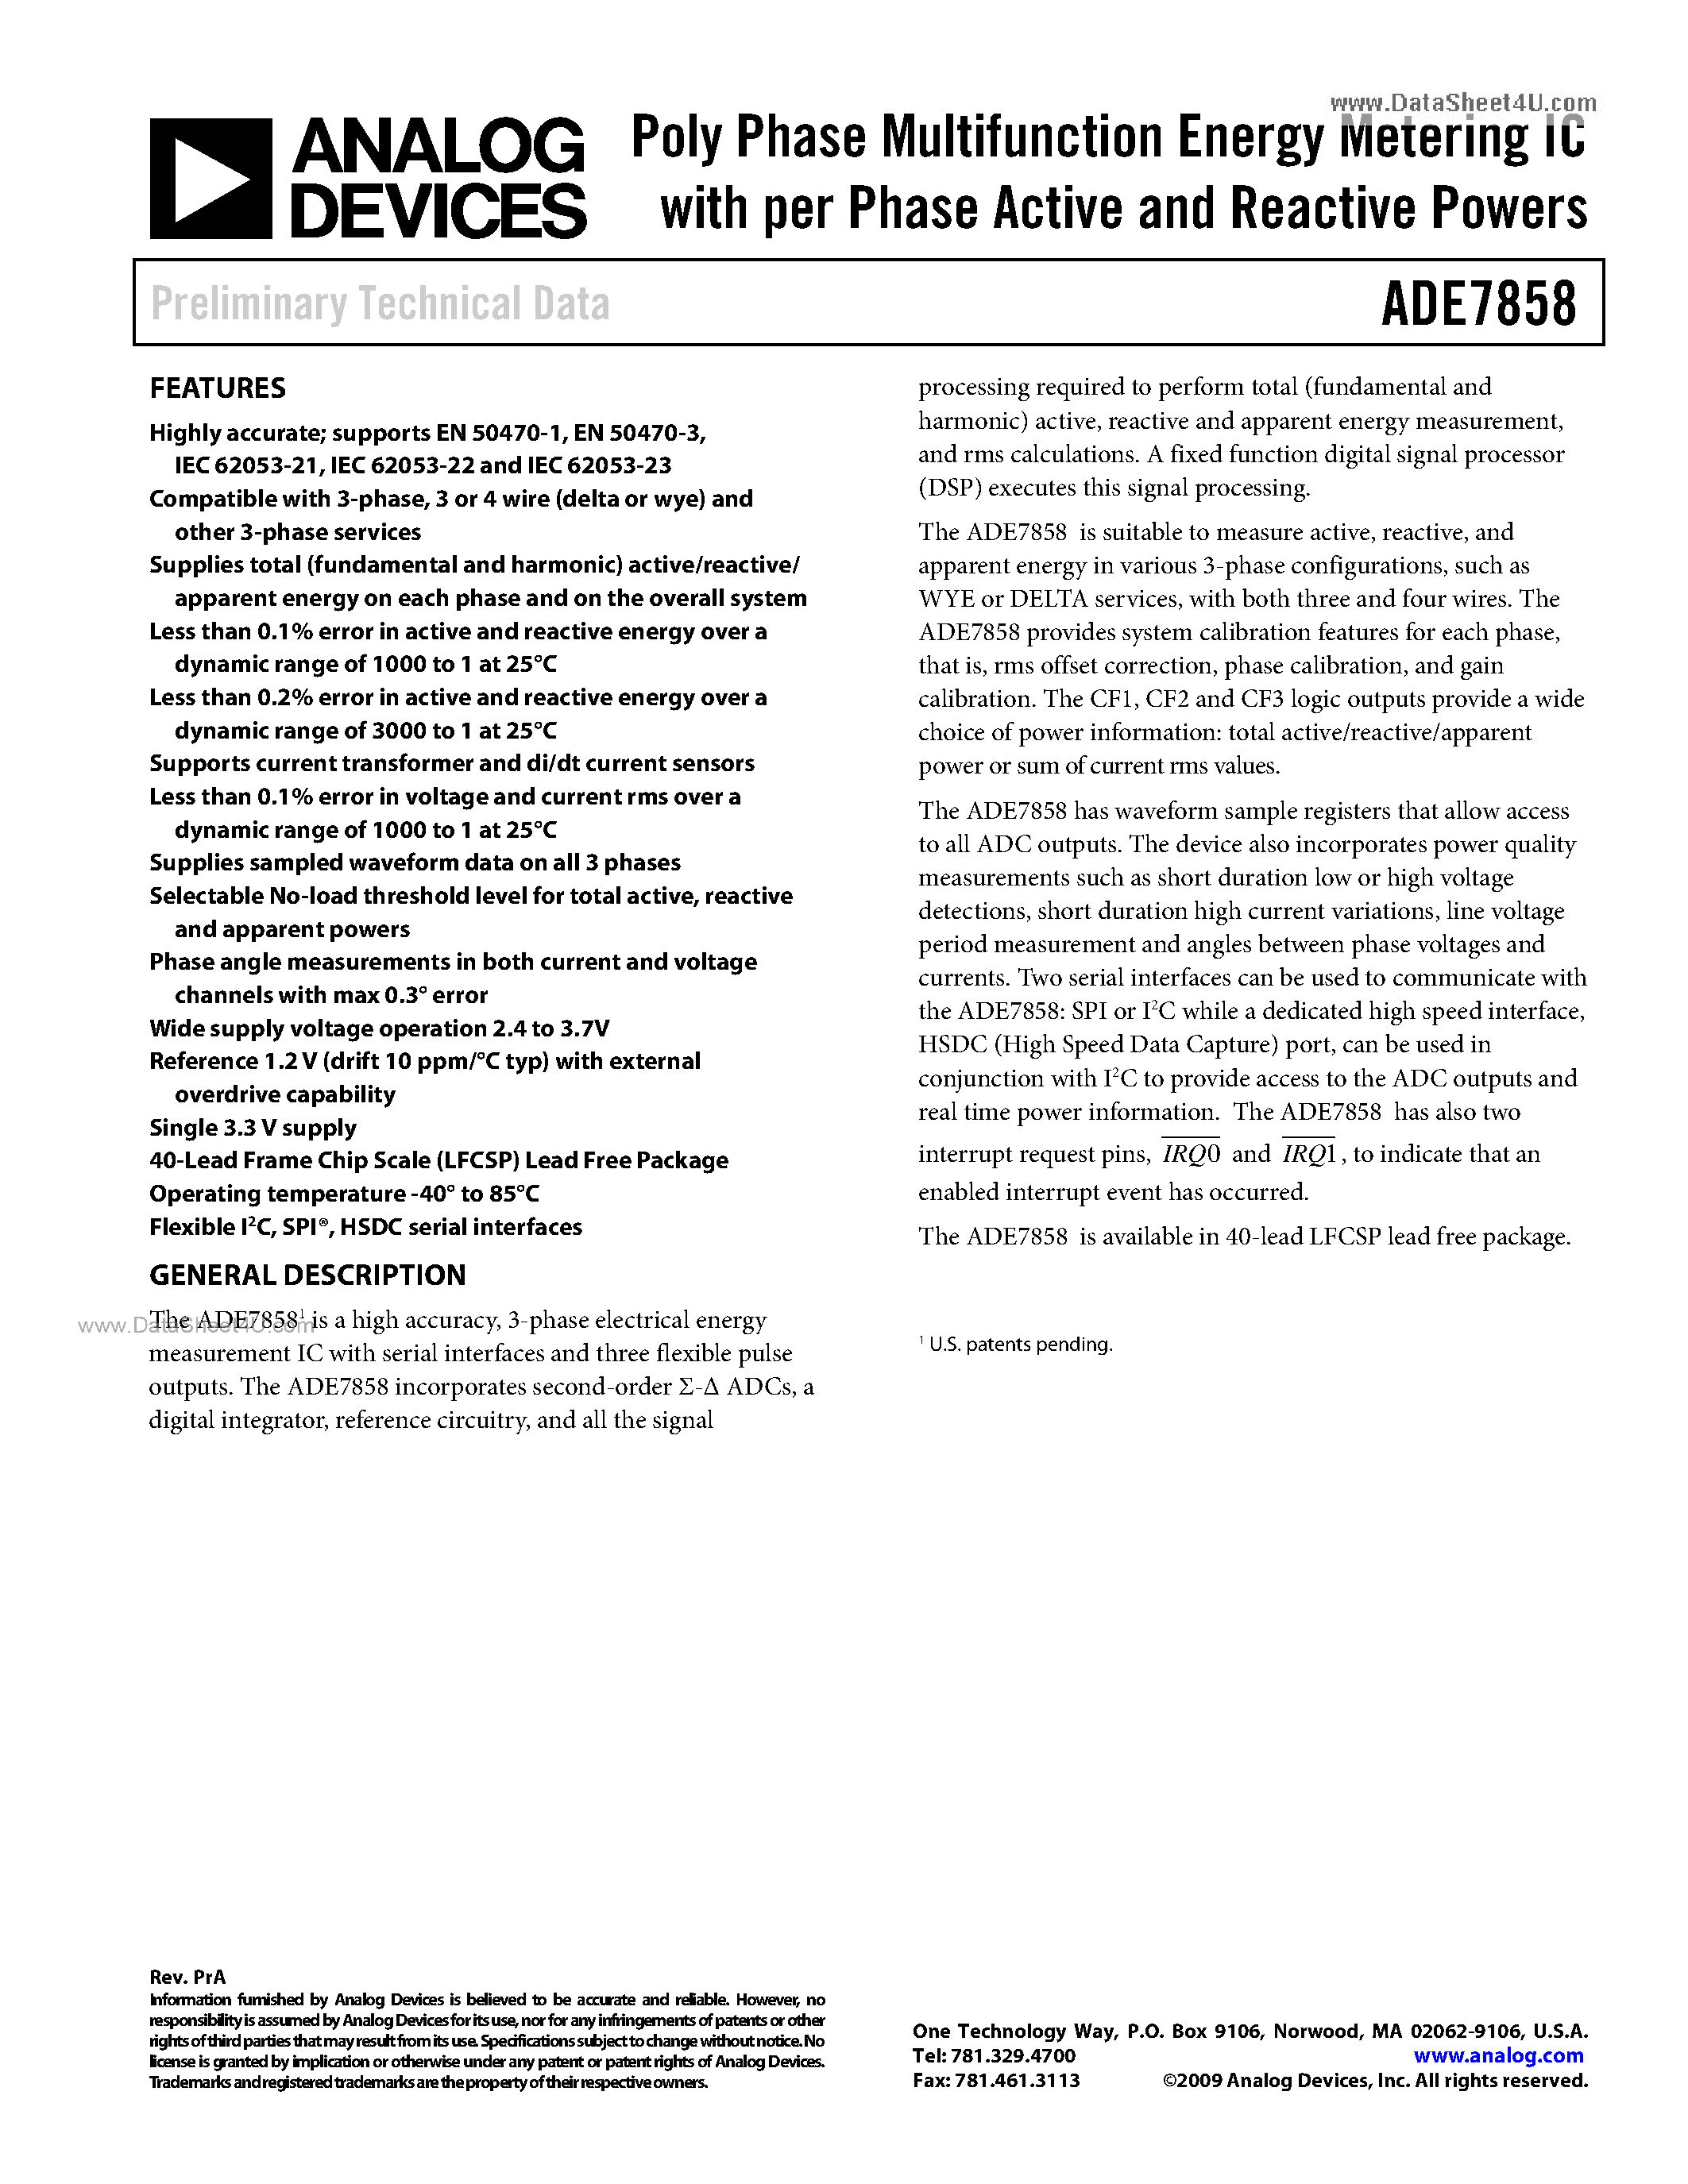 Datasheet ADE7858 - Poly Phase Multifunction Energy Metering IC page 1